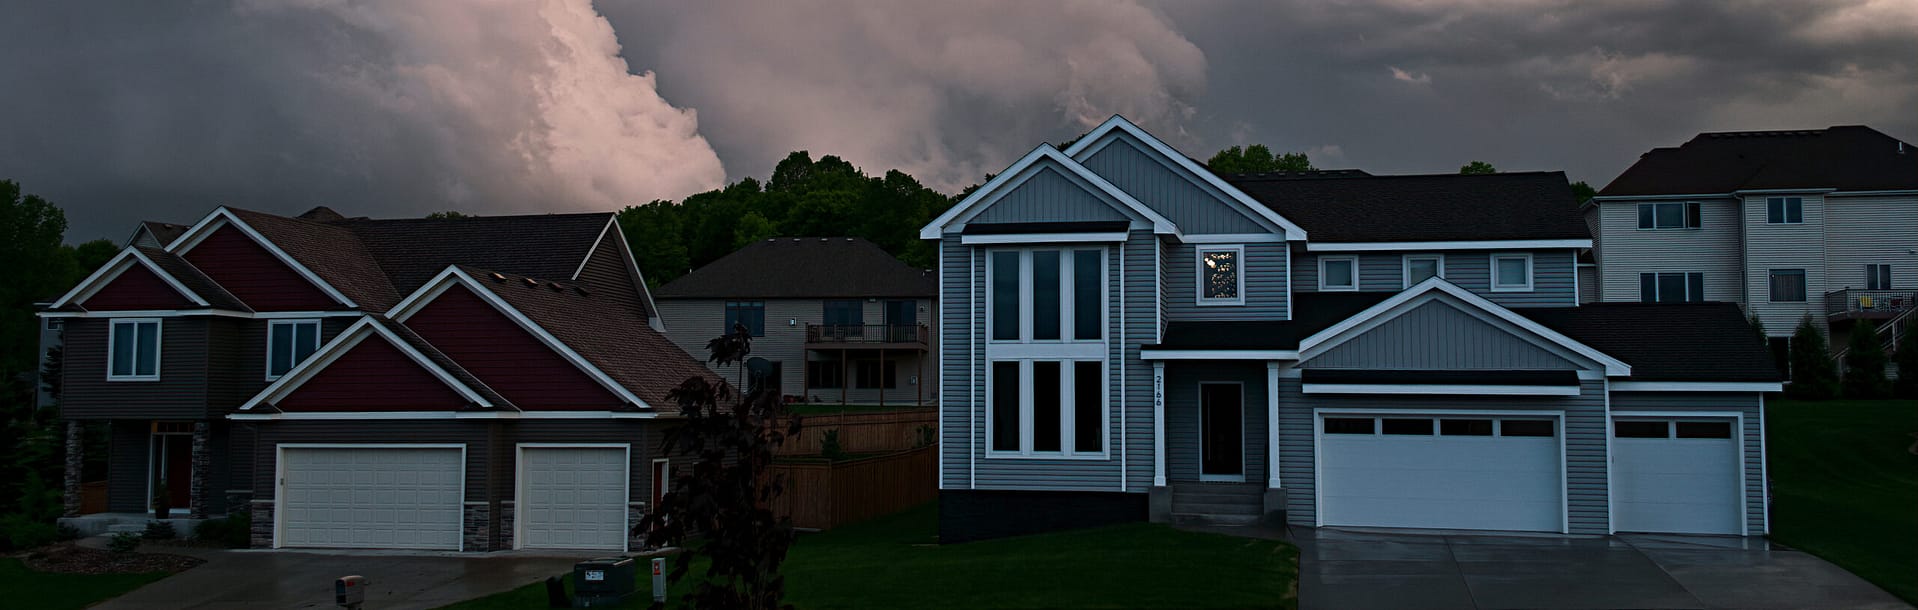 storm brewing over minnesota neighborhood roofscape